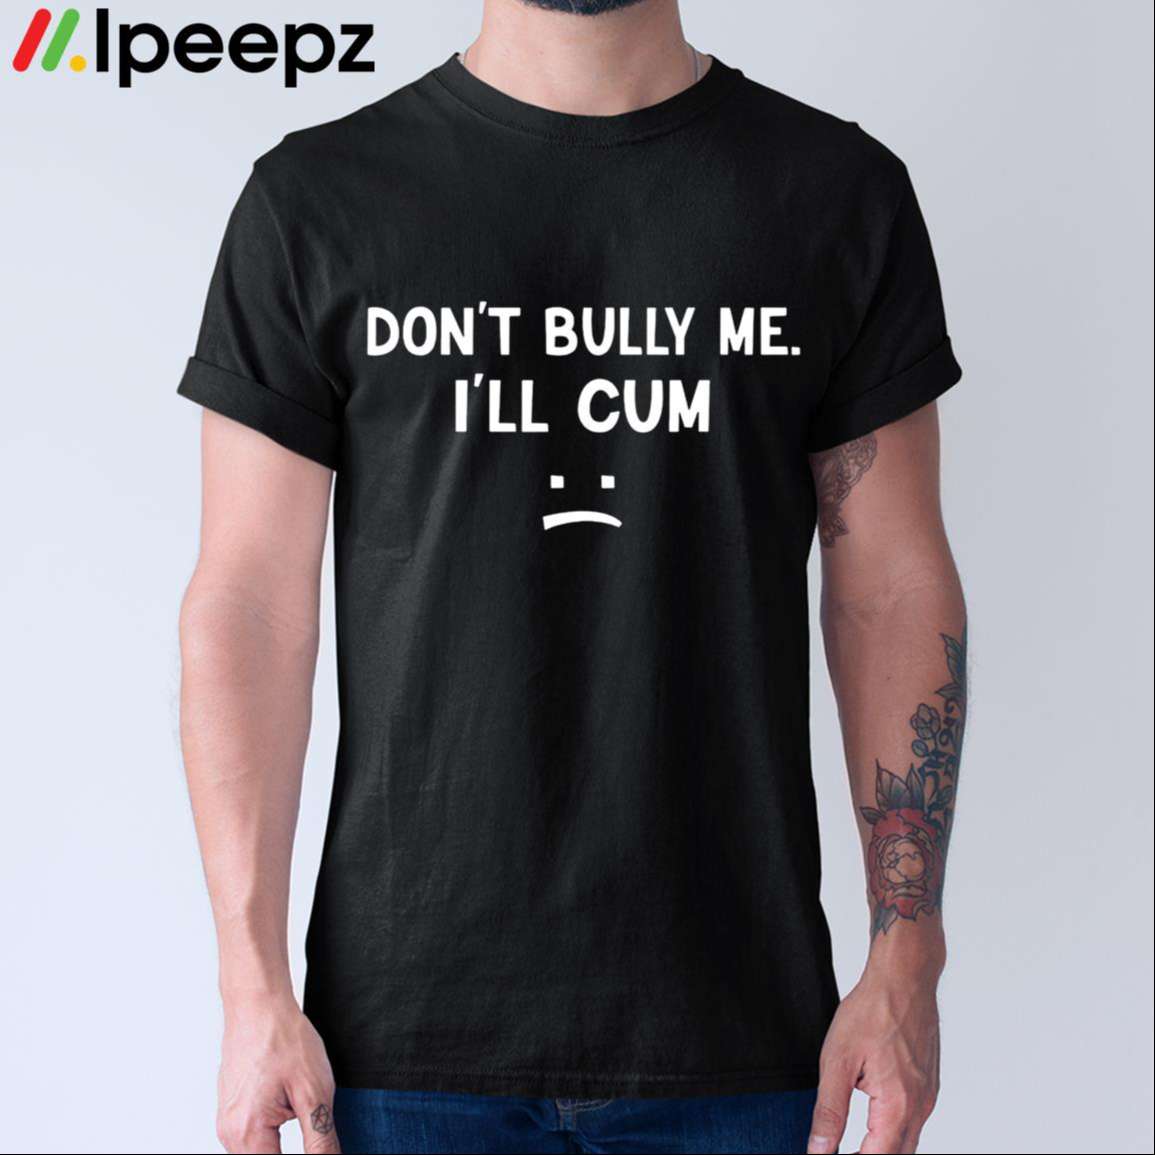 Dont Bully Me Ill Cum Shirt